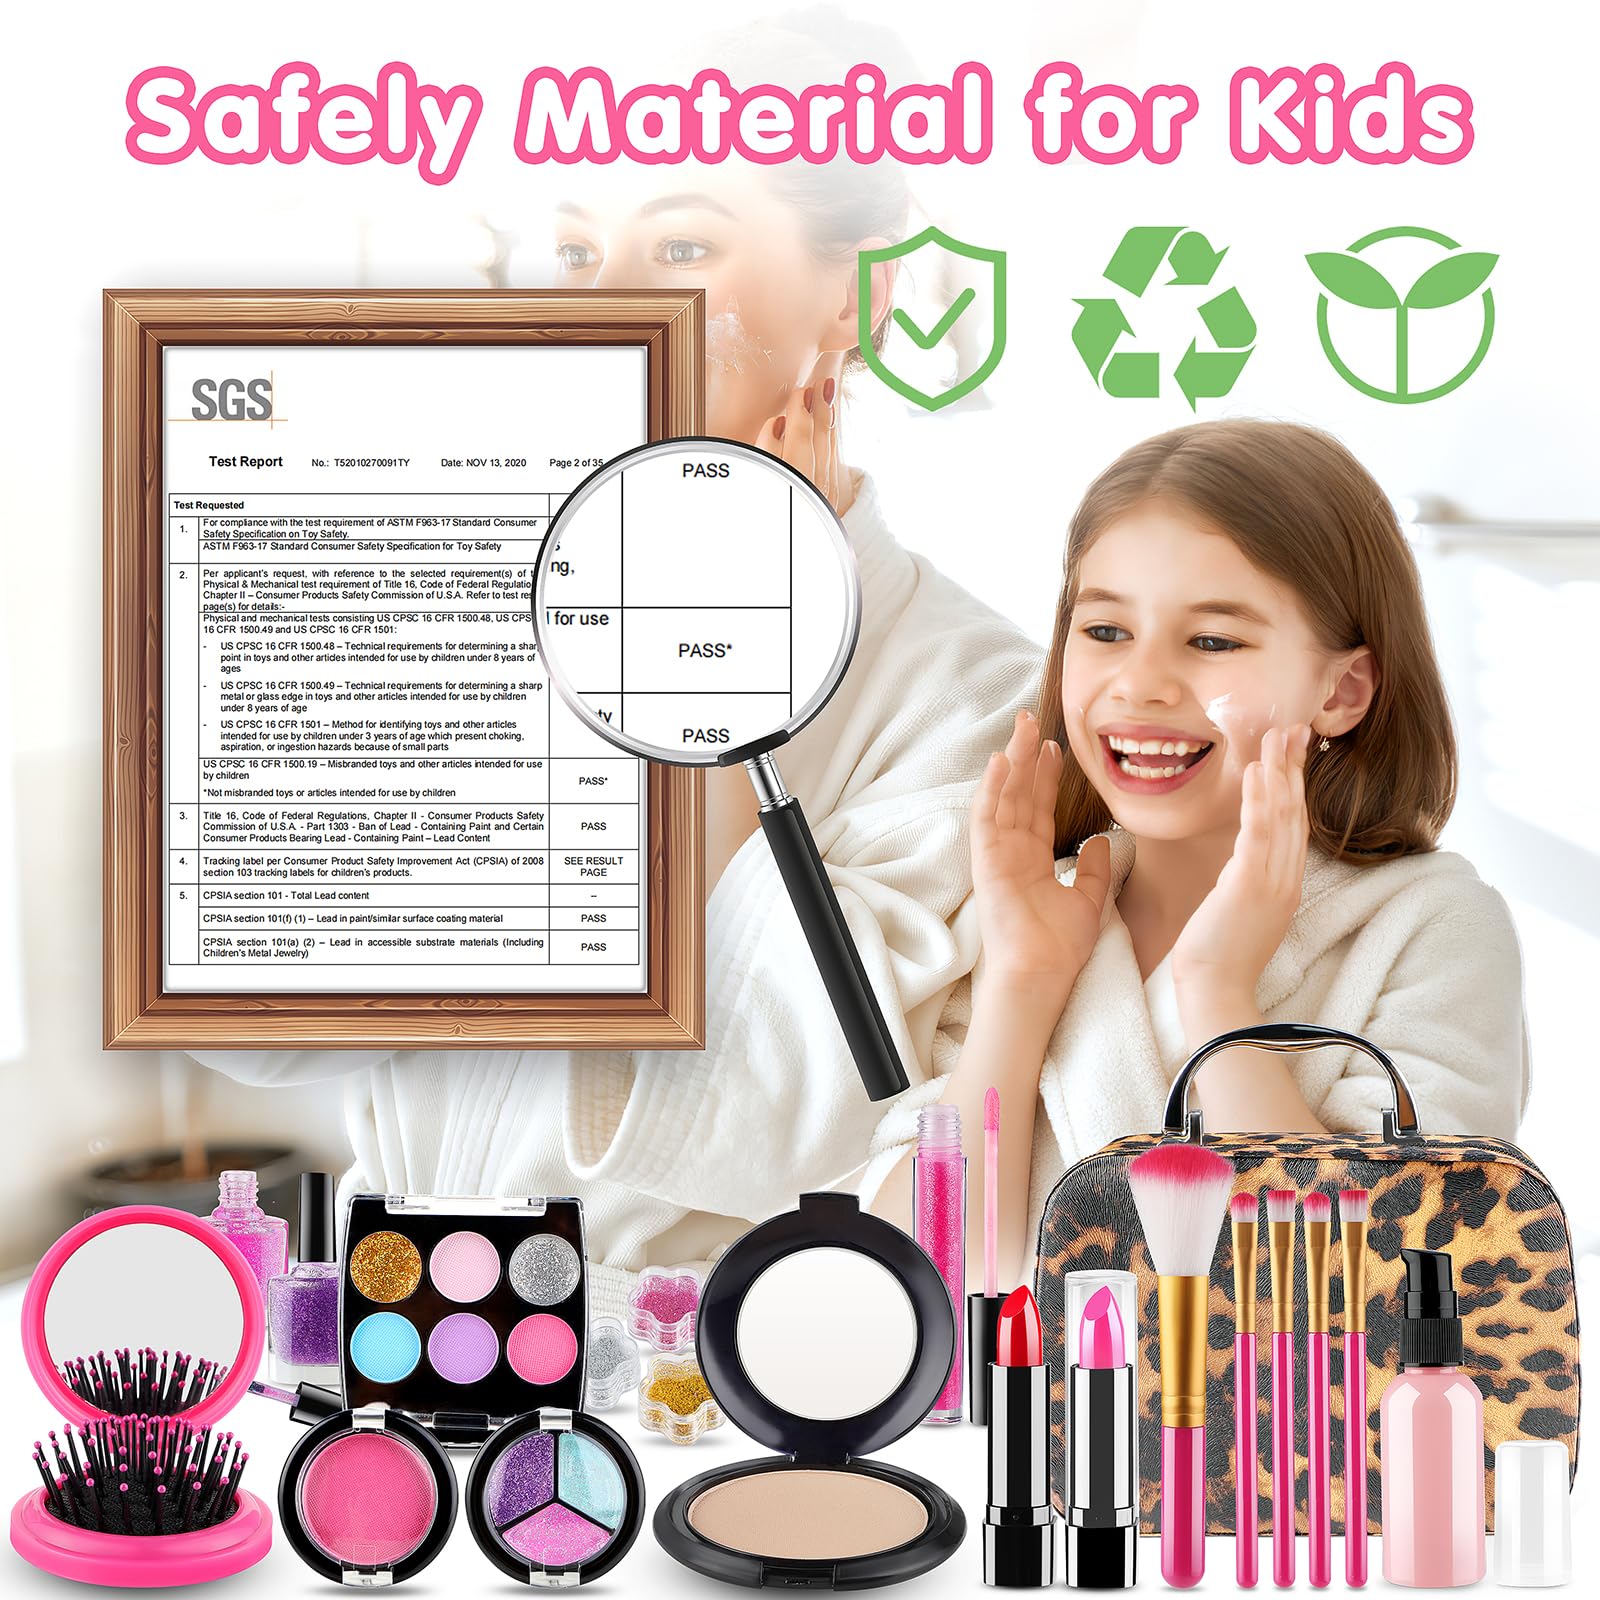 Smallzi Kids Makeup Kit for Girls, Washable Makeup Set Toy, 23PCS Real Makeup Set, Safe & Non-Toxic Little Girls Makeup Kit Pretend Make